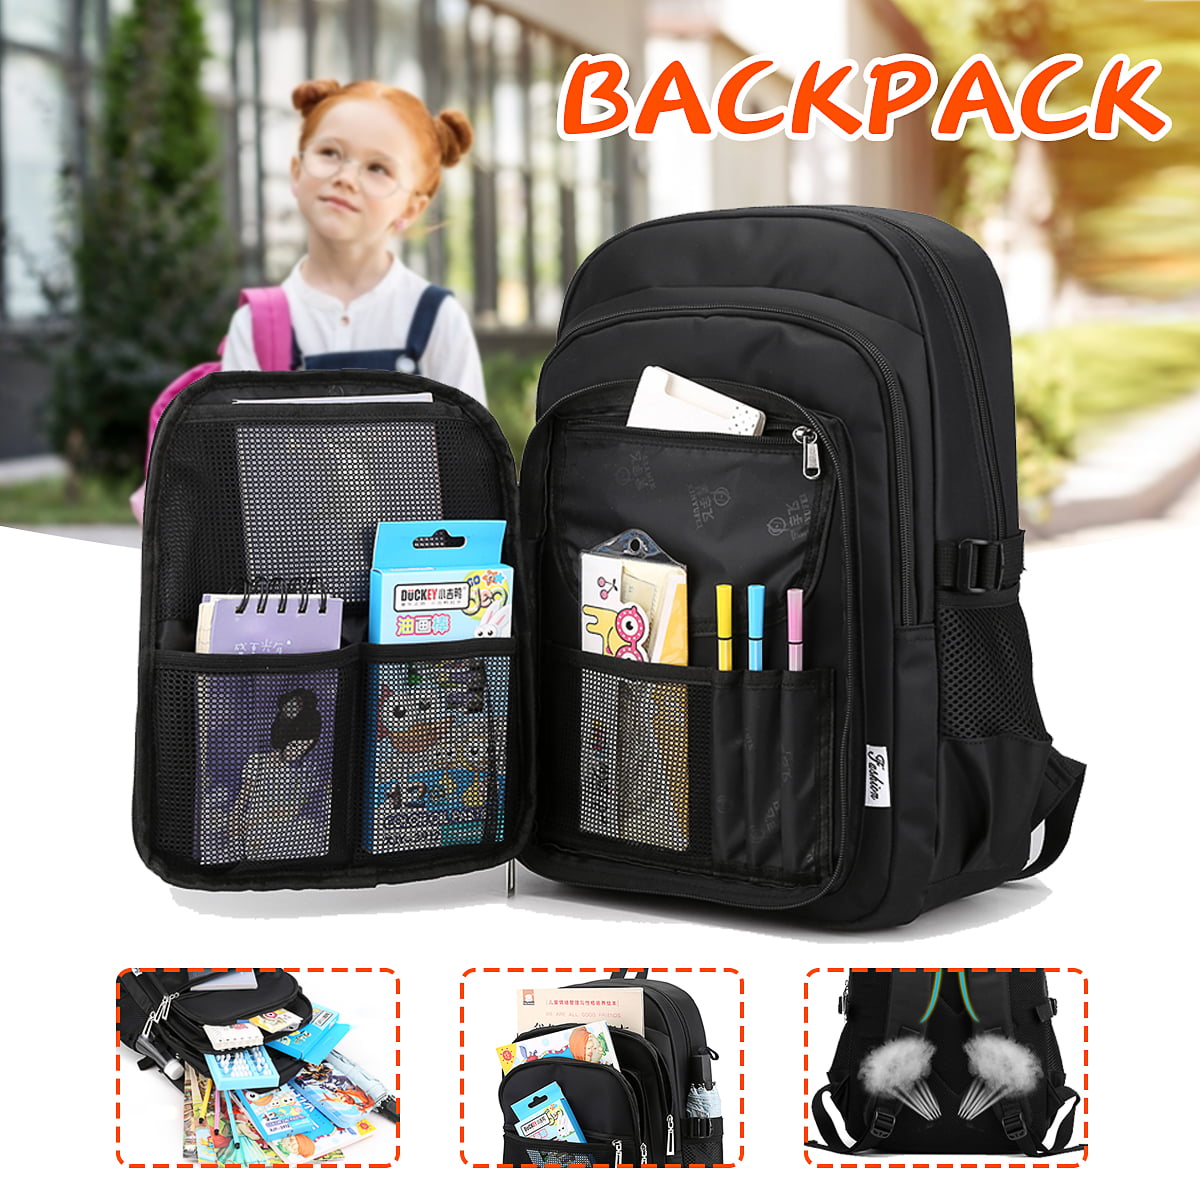 Ballet Shoes Laptop Backpack Basic Casual Bag Bookbag for Picnic Travel Hiking Business Office